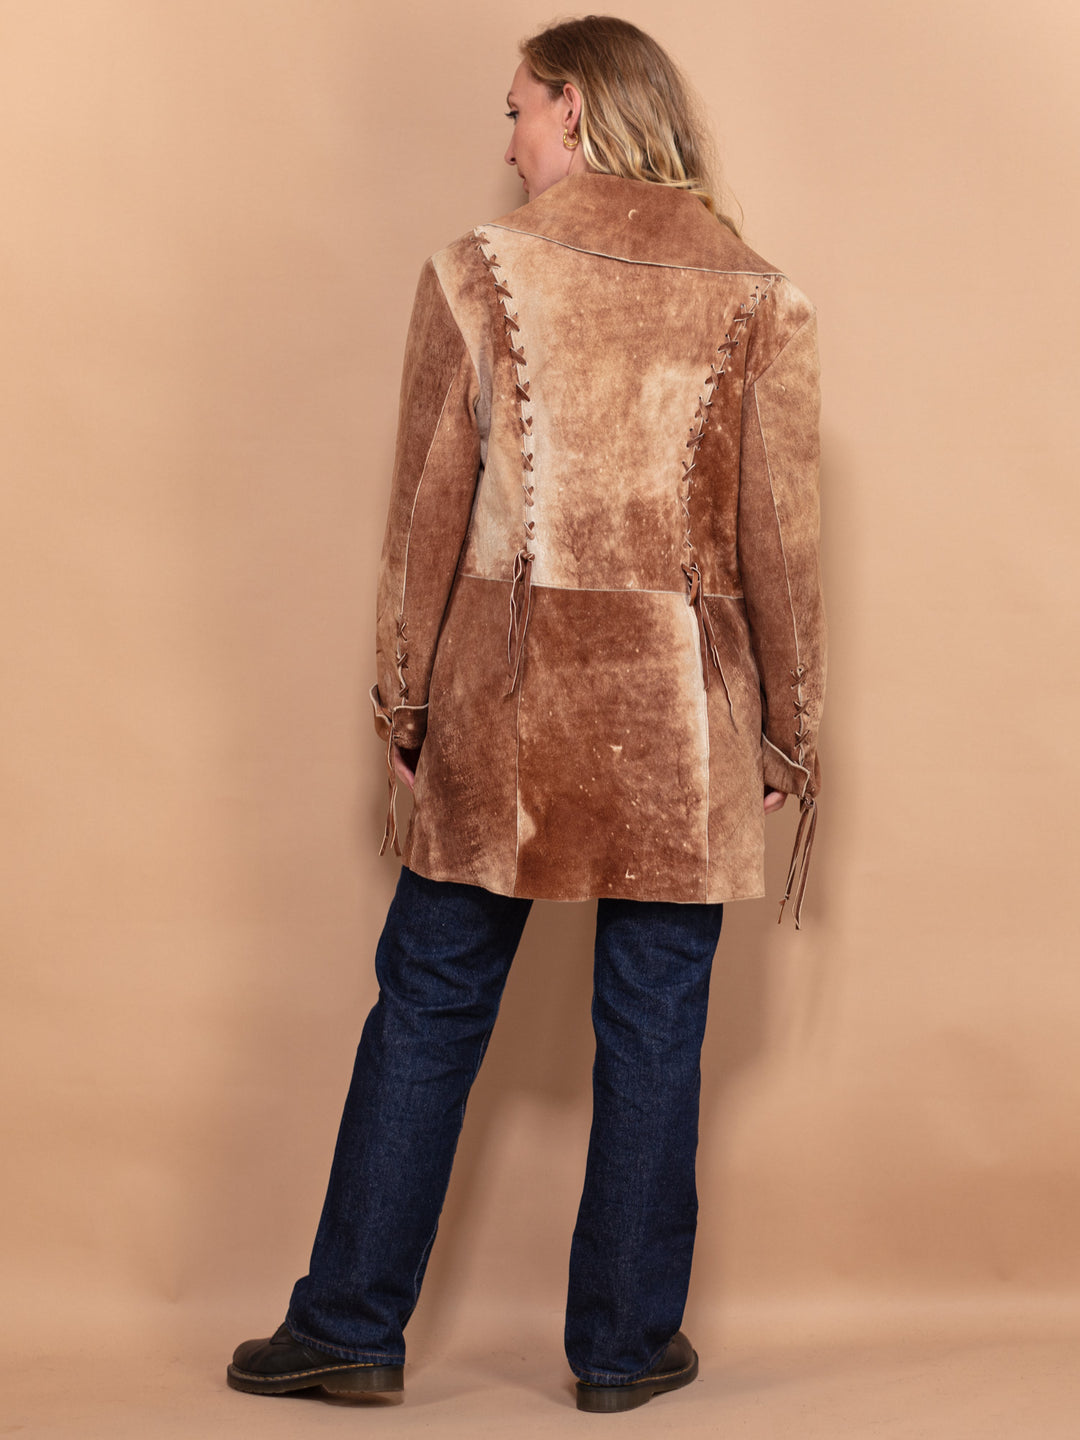 Brown Suede Coat 90s, Size Medium, Vintage Women Western Style Coat, Light Brown Suede Leather Long Jacket, Boho Hippie Coat